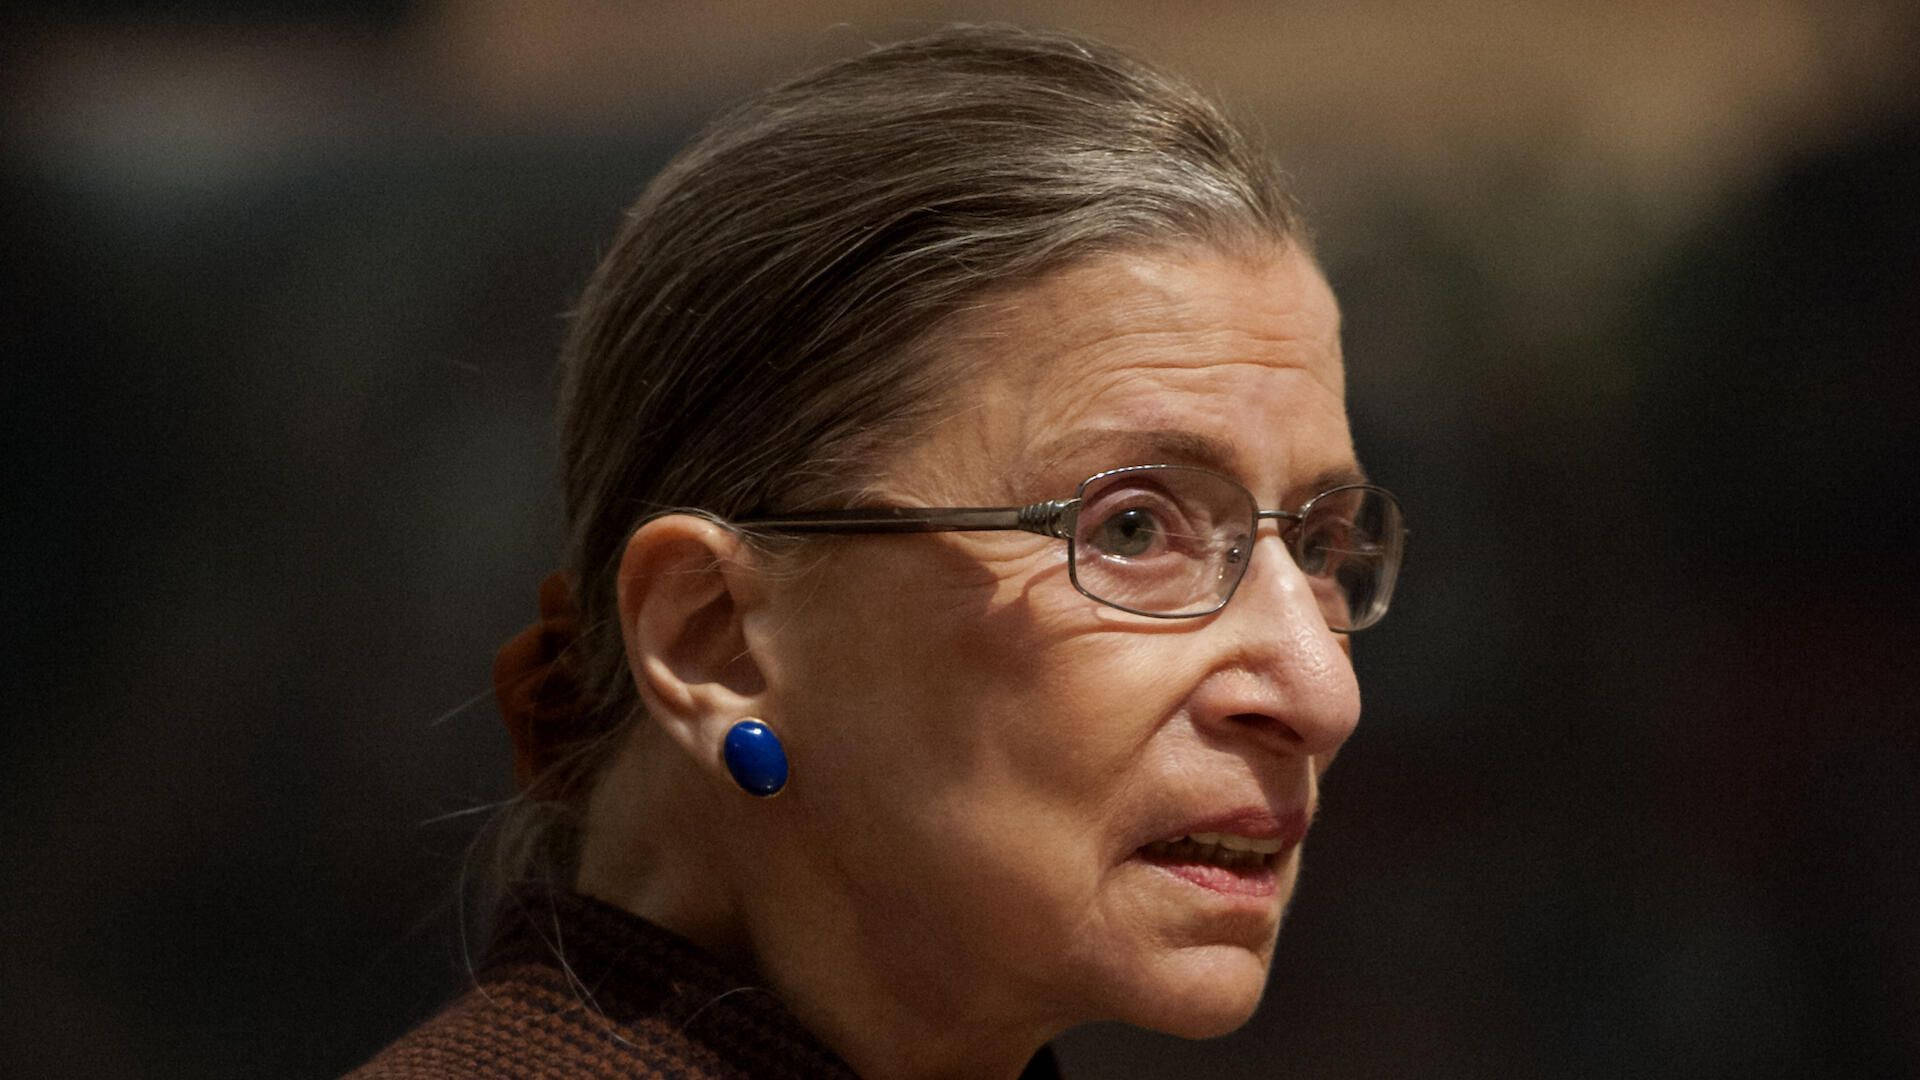 Ruth Bader Ginsburg Deep Blue Earring Background